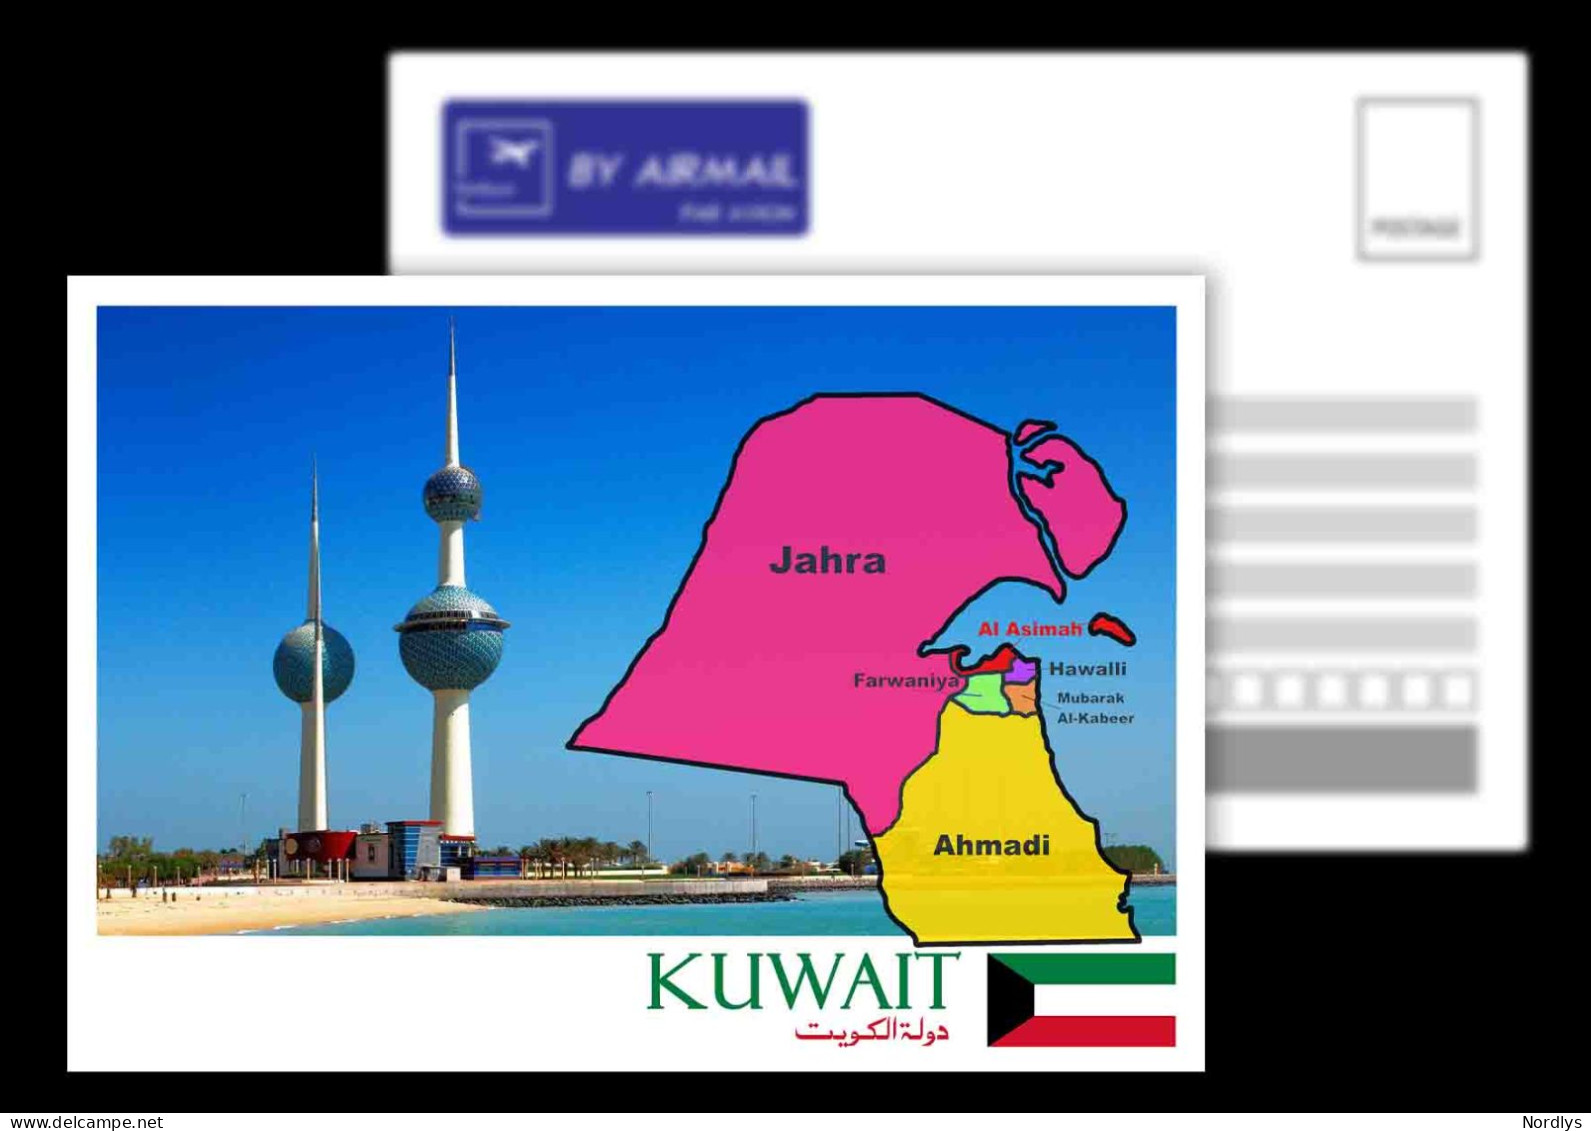 Kuwait / Kuwait City / Postcard / View Card / Map Card - Koeweit